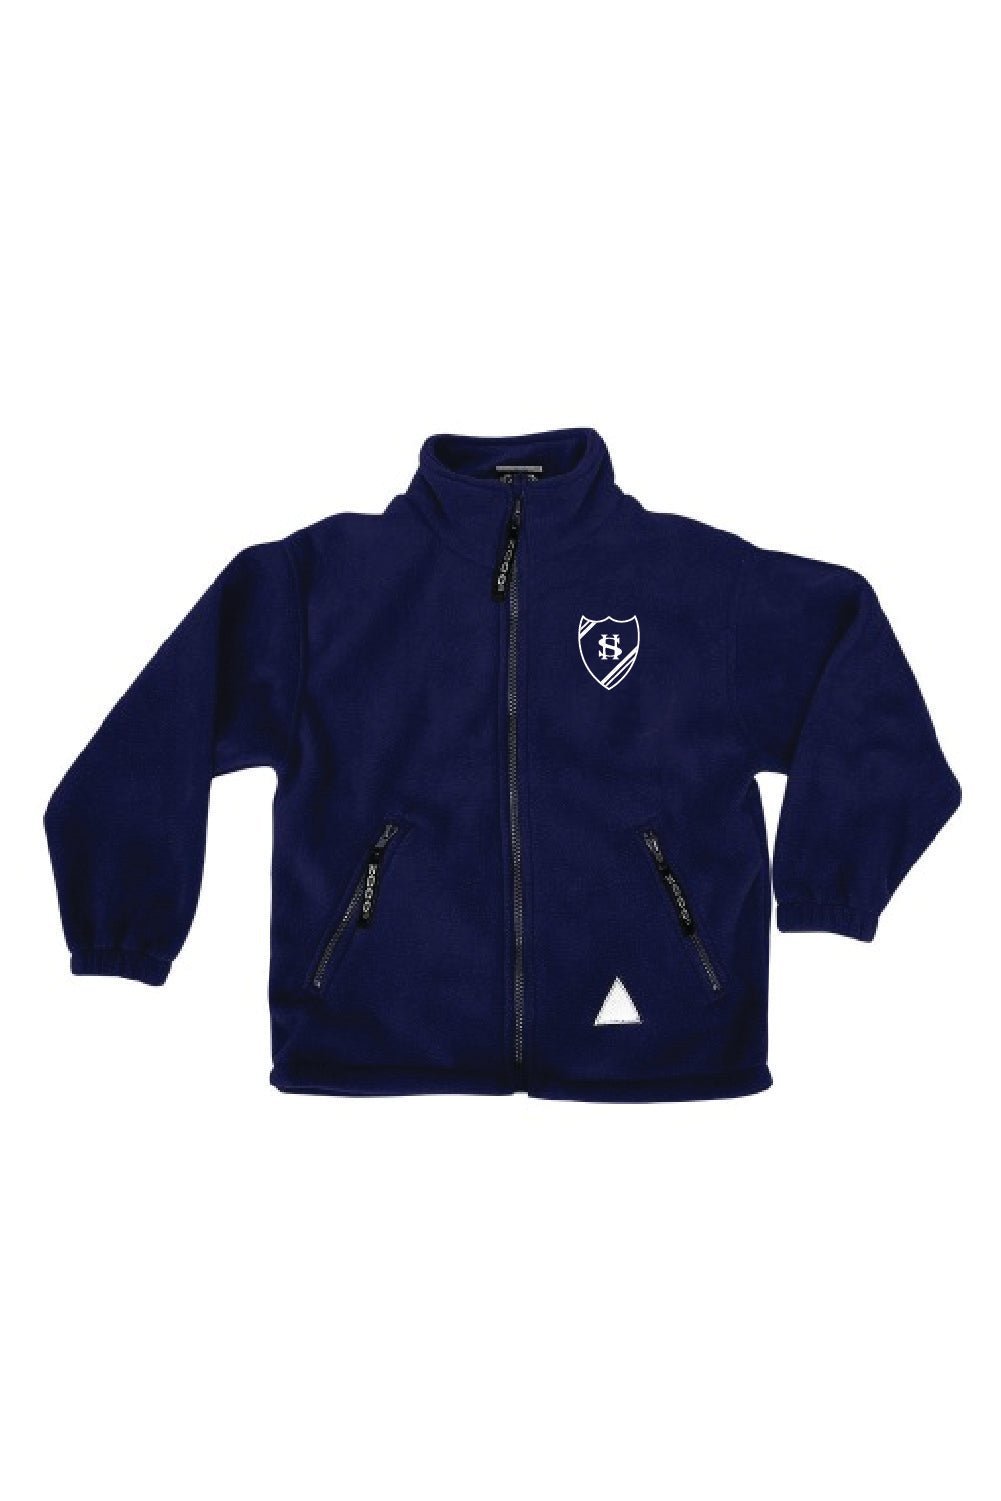 Somers Heath Reversable Fleece - Uniformwise Schoolwear